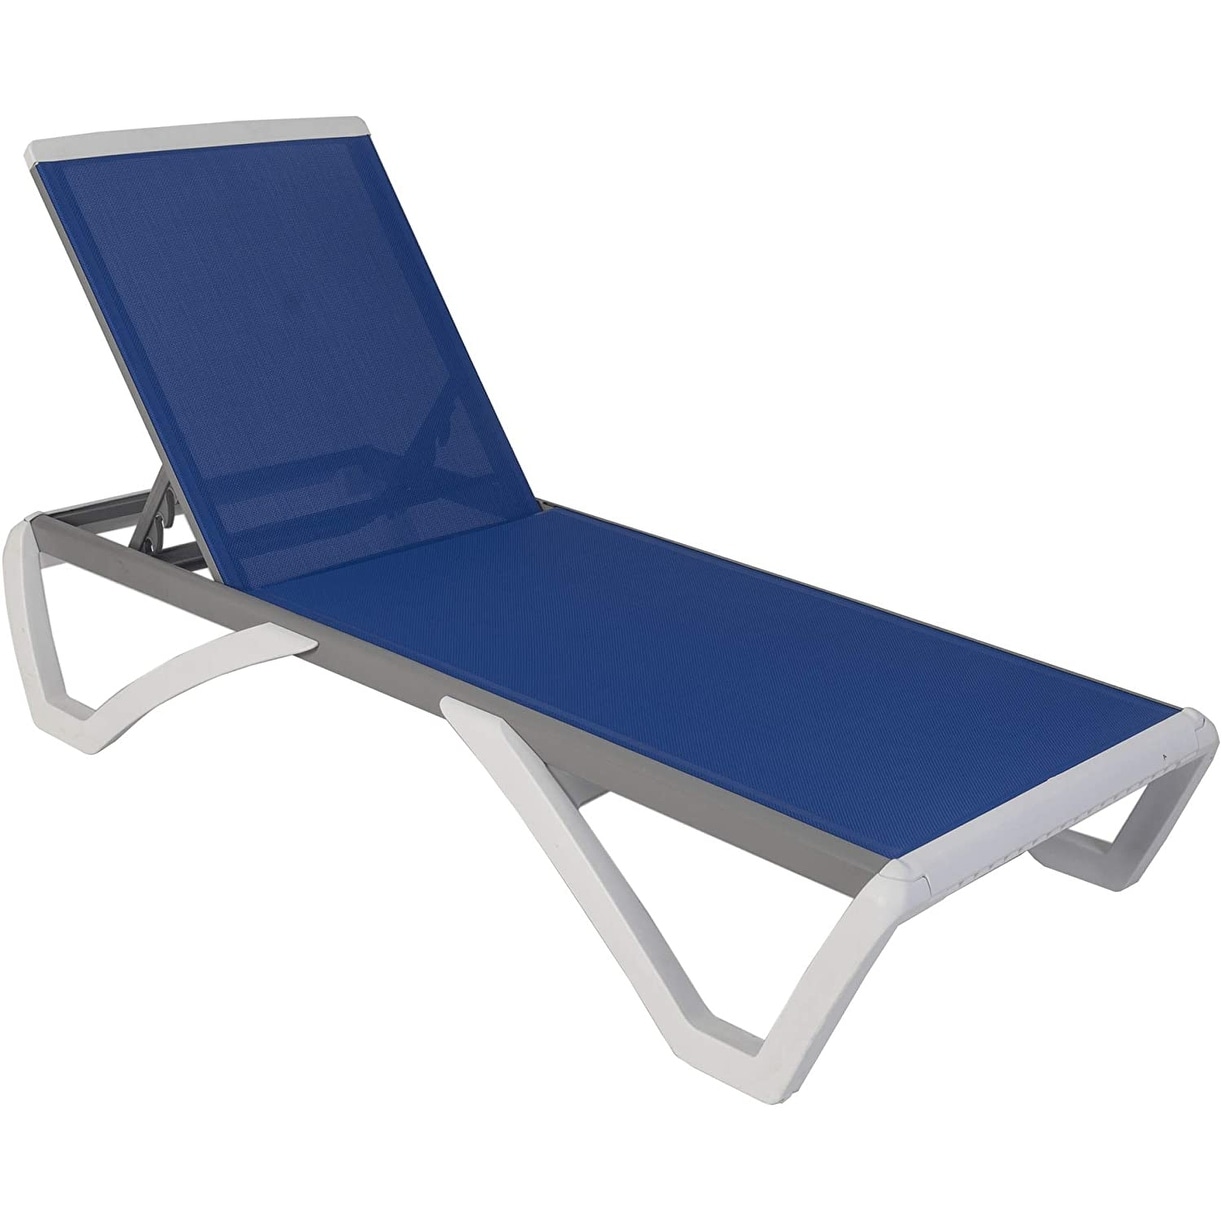 Kozyard Alan Full Flat Aluminum And Polypropylene Resin Legs Patio Reclining Adjustable Chaise Lounge